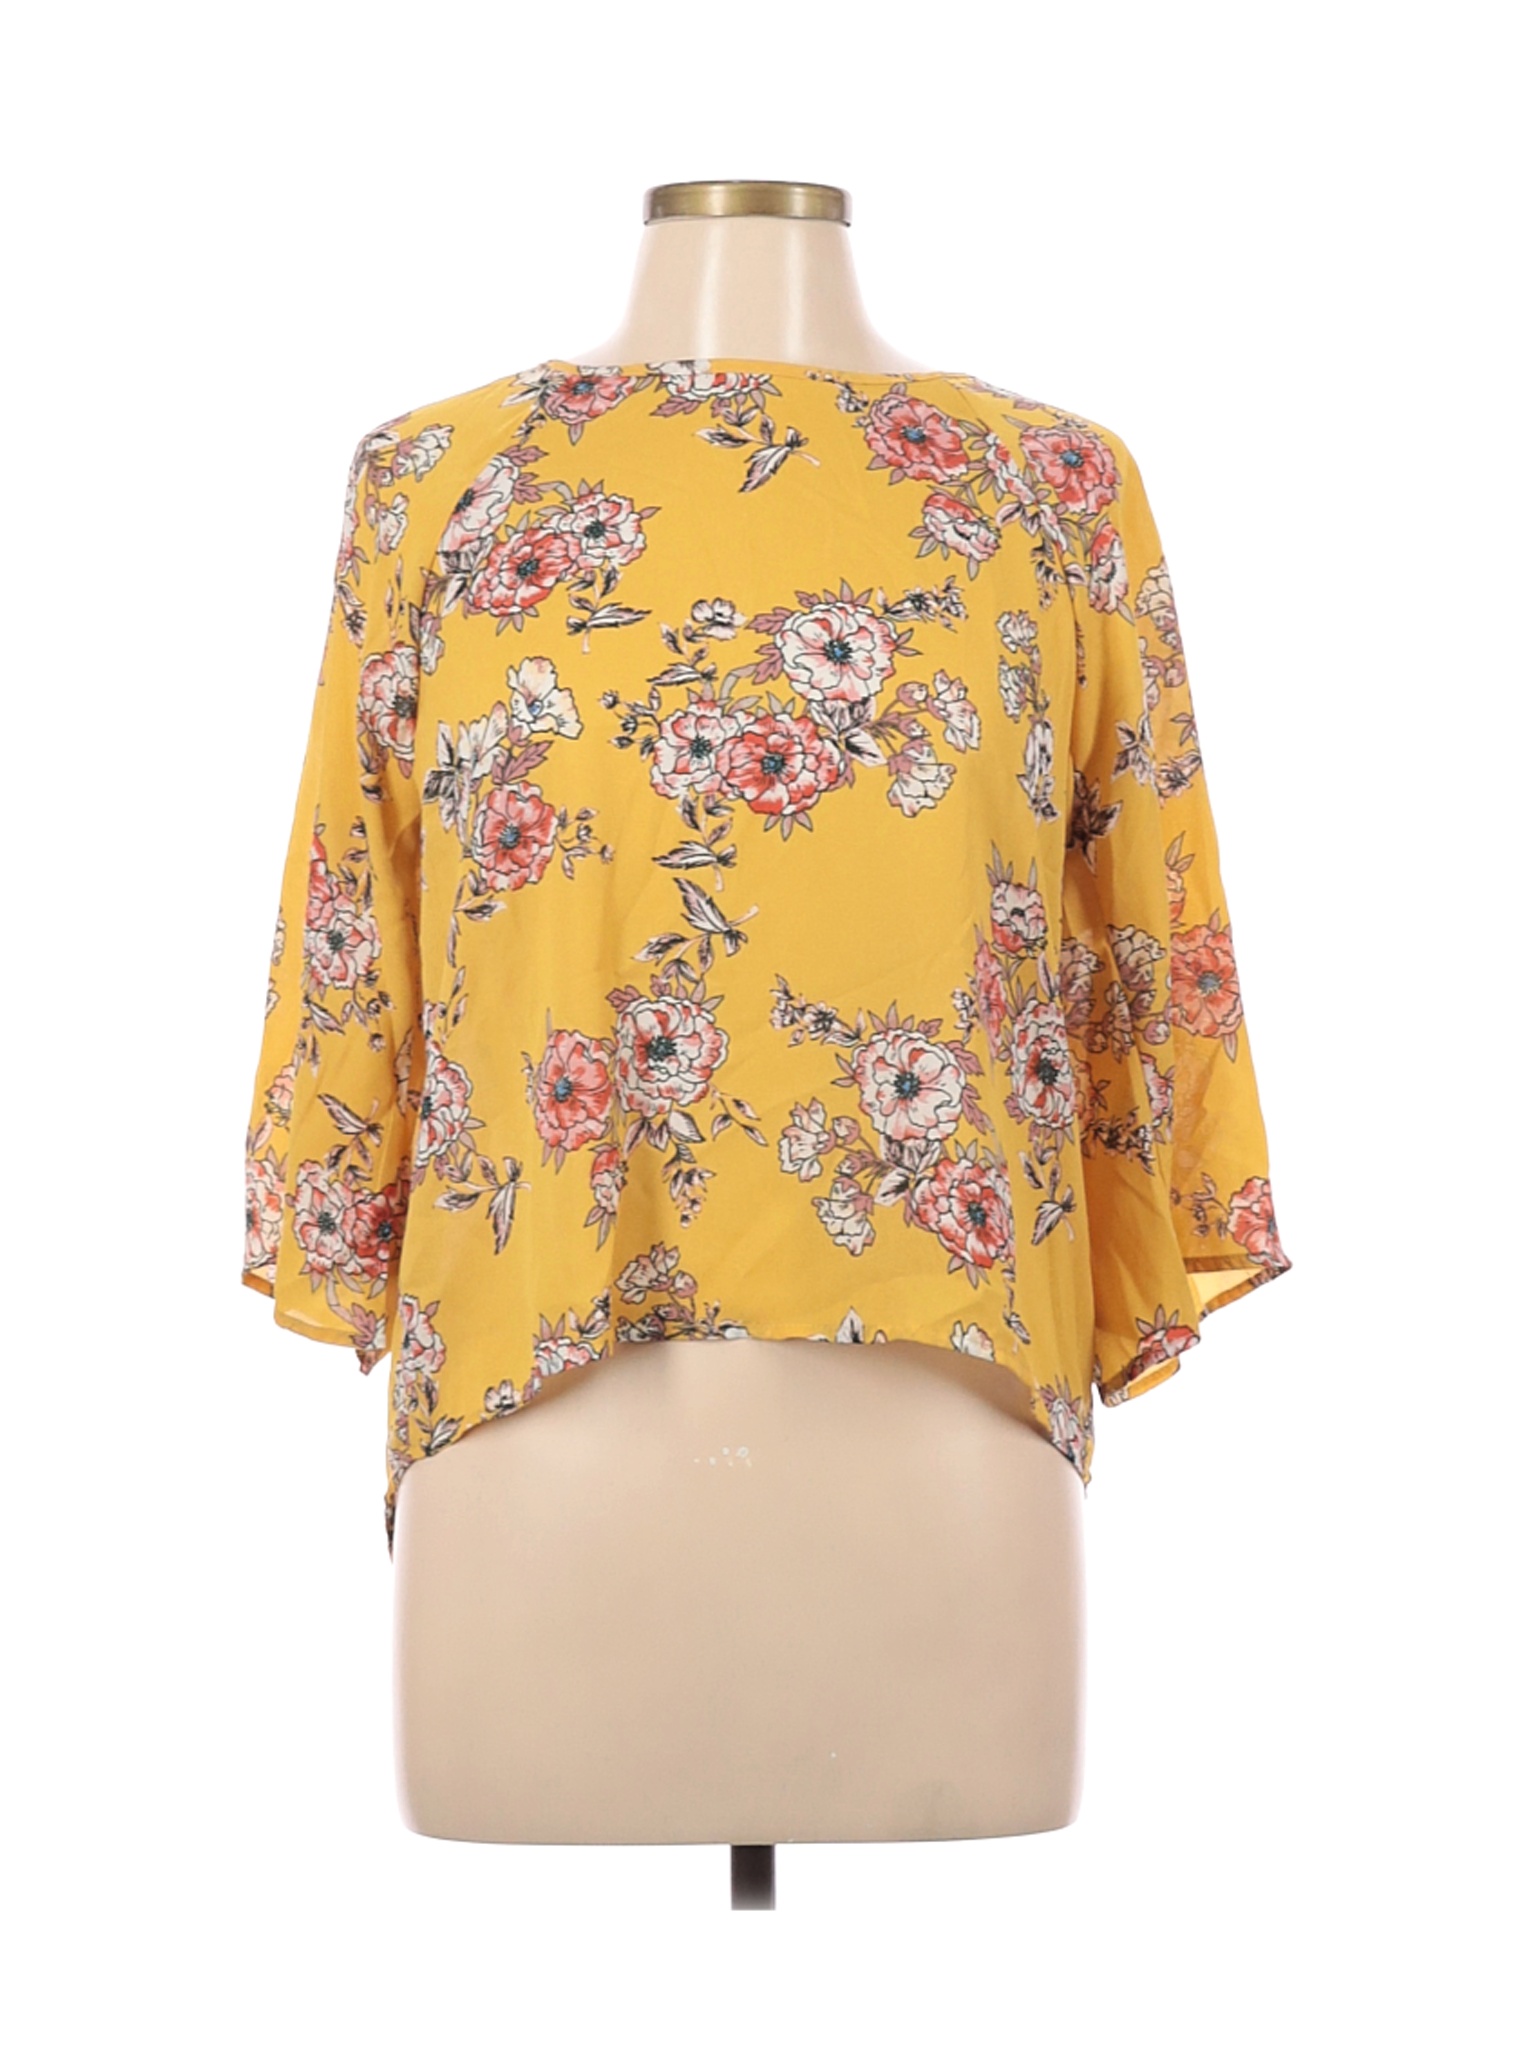 Papermoon Women Yellow 3/4 Sleeve Blouse M Petites | eBay